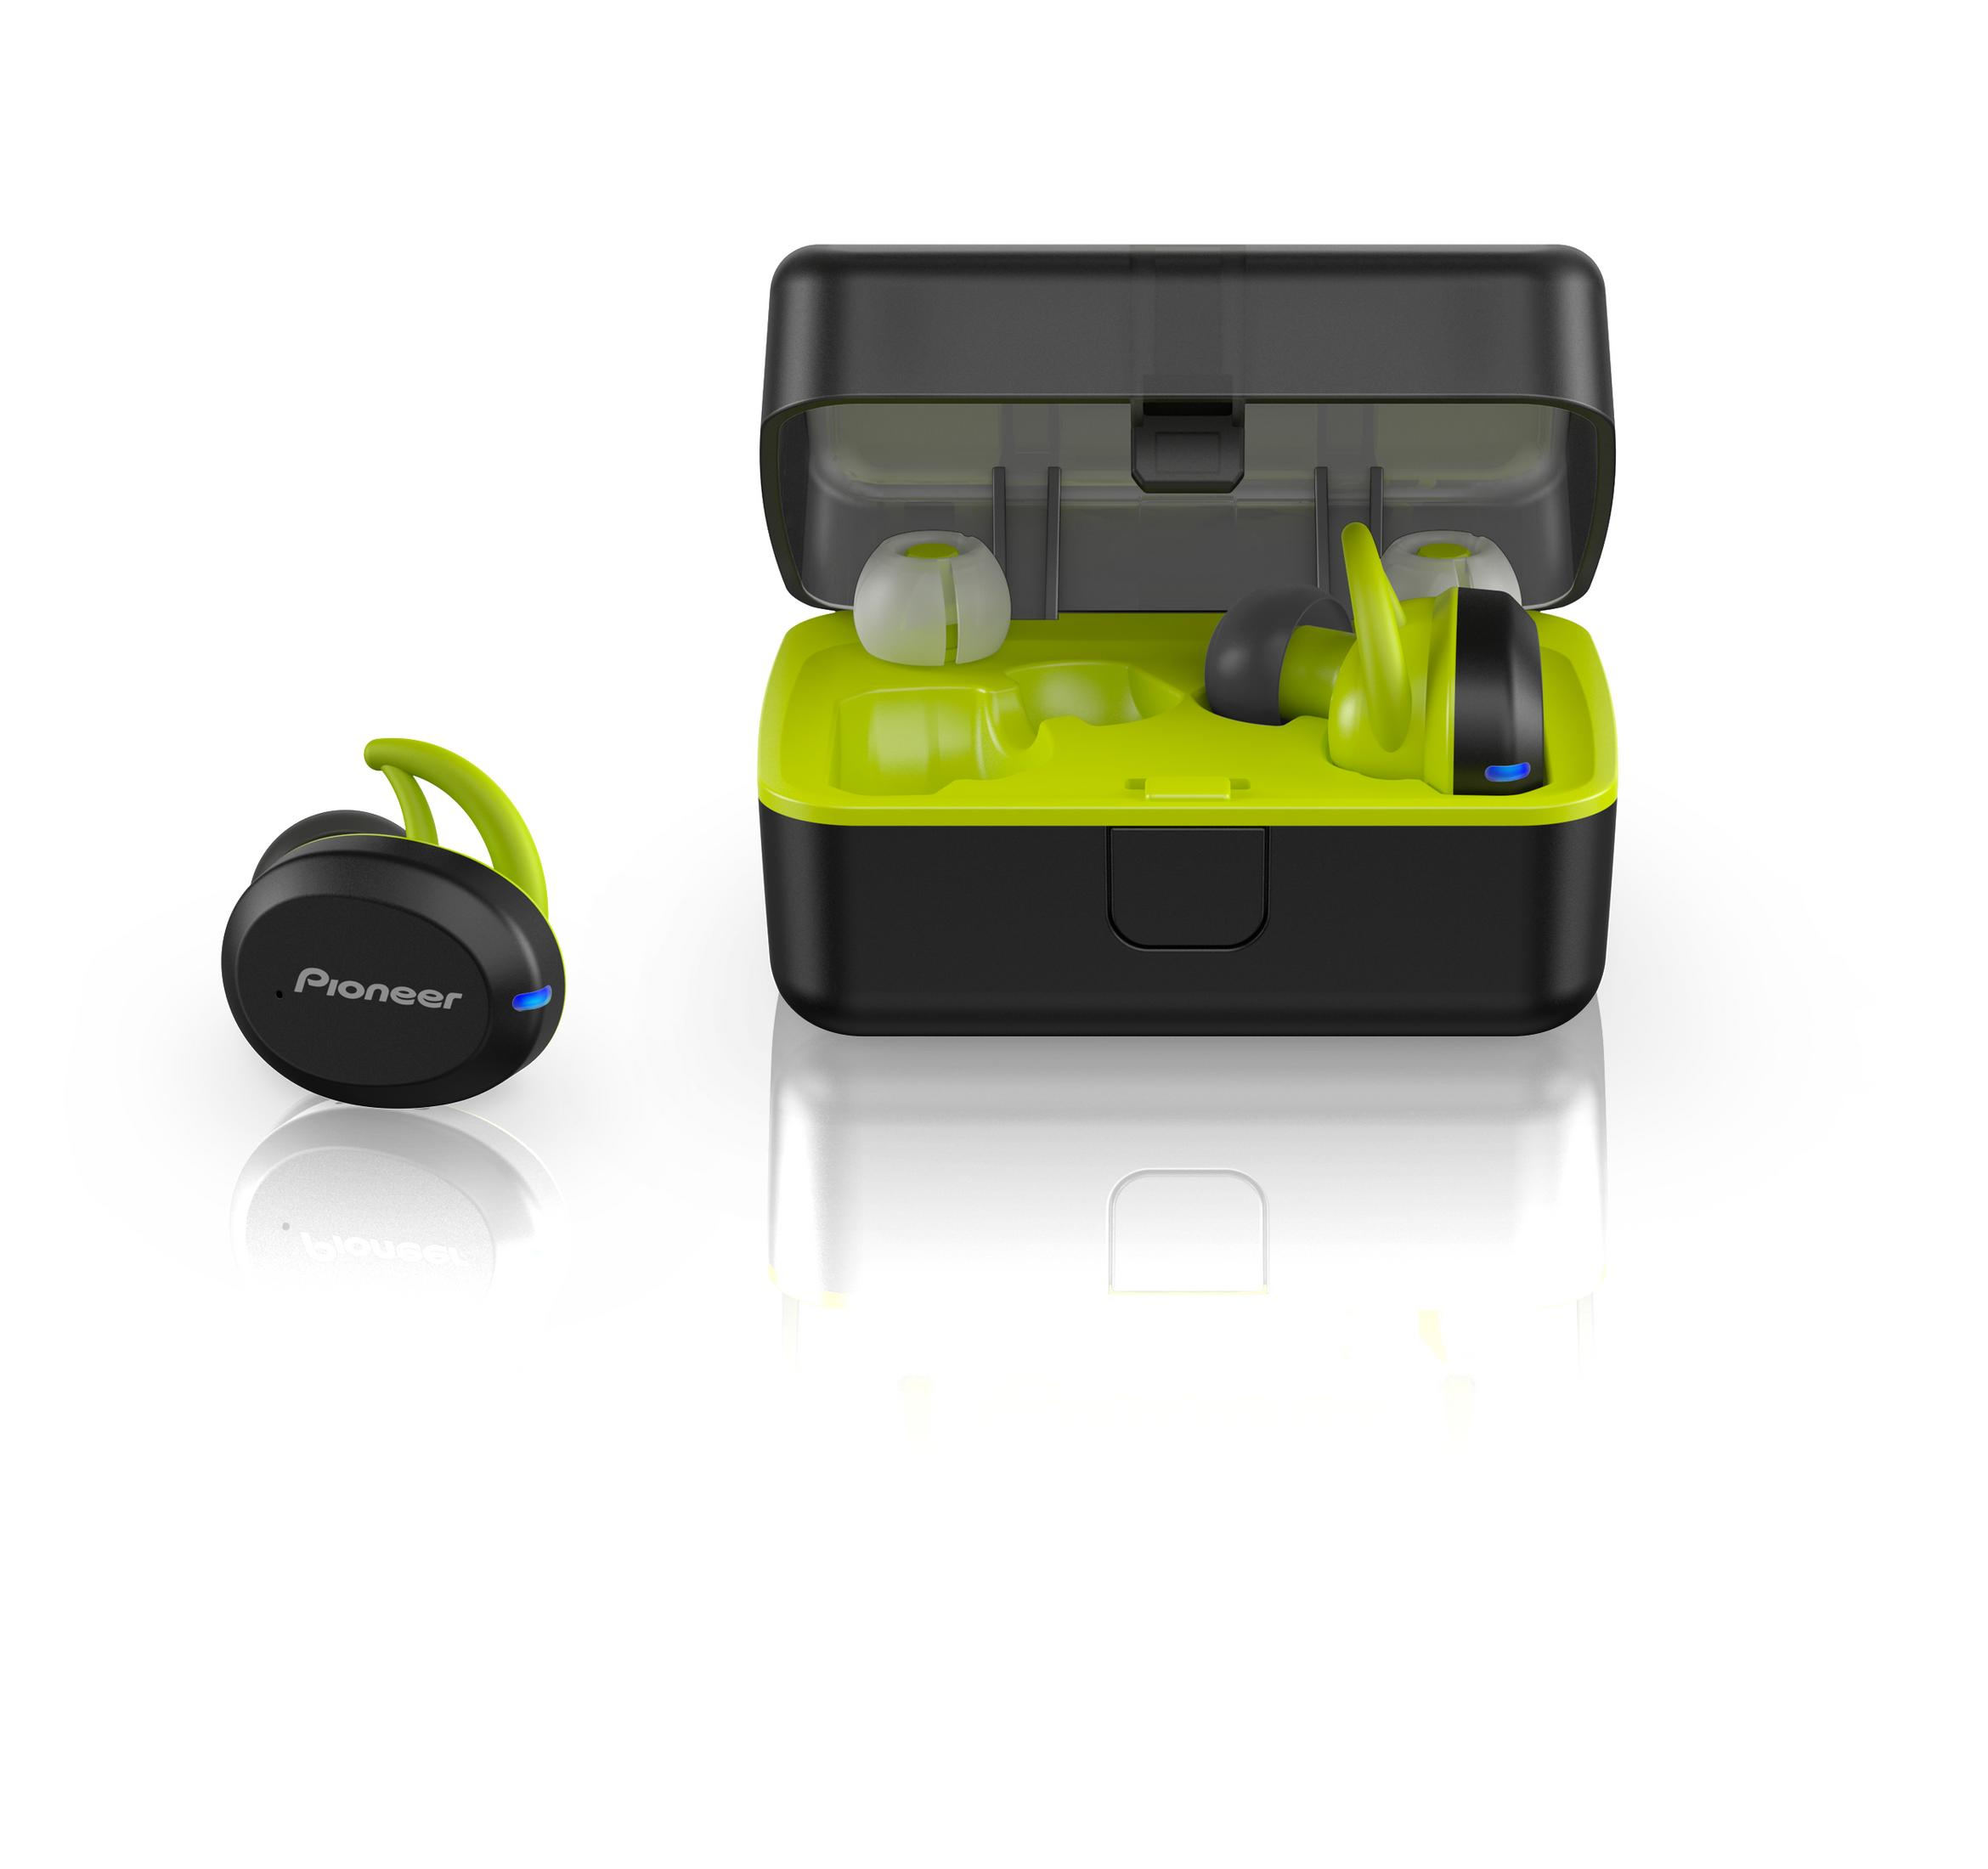 PIONEER SE-E 9 TW-Y, Kopfhörer Gelb In-ear Bluetooth